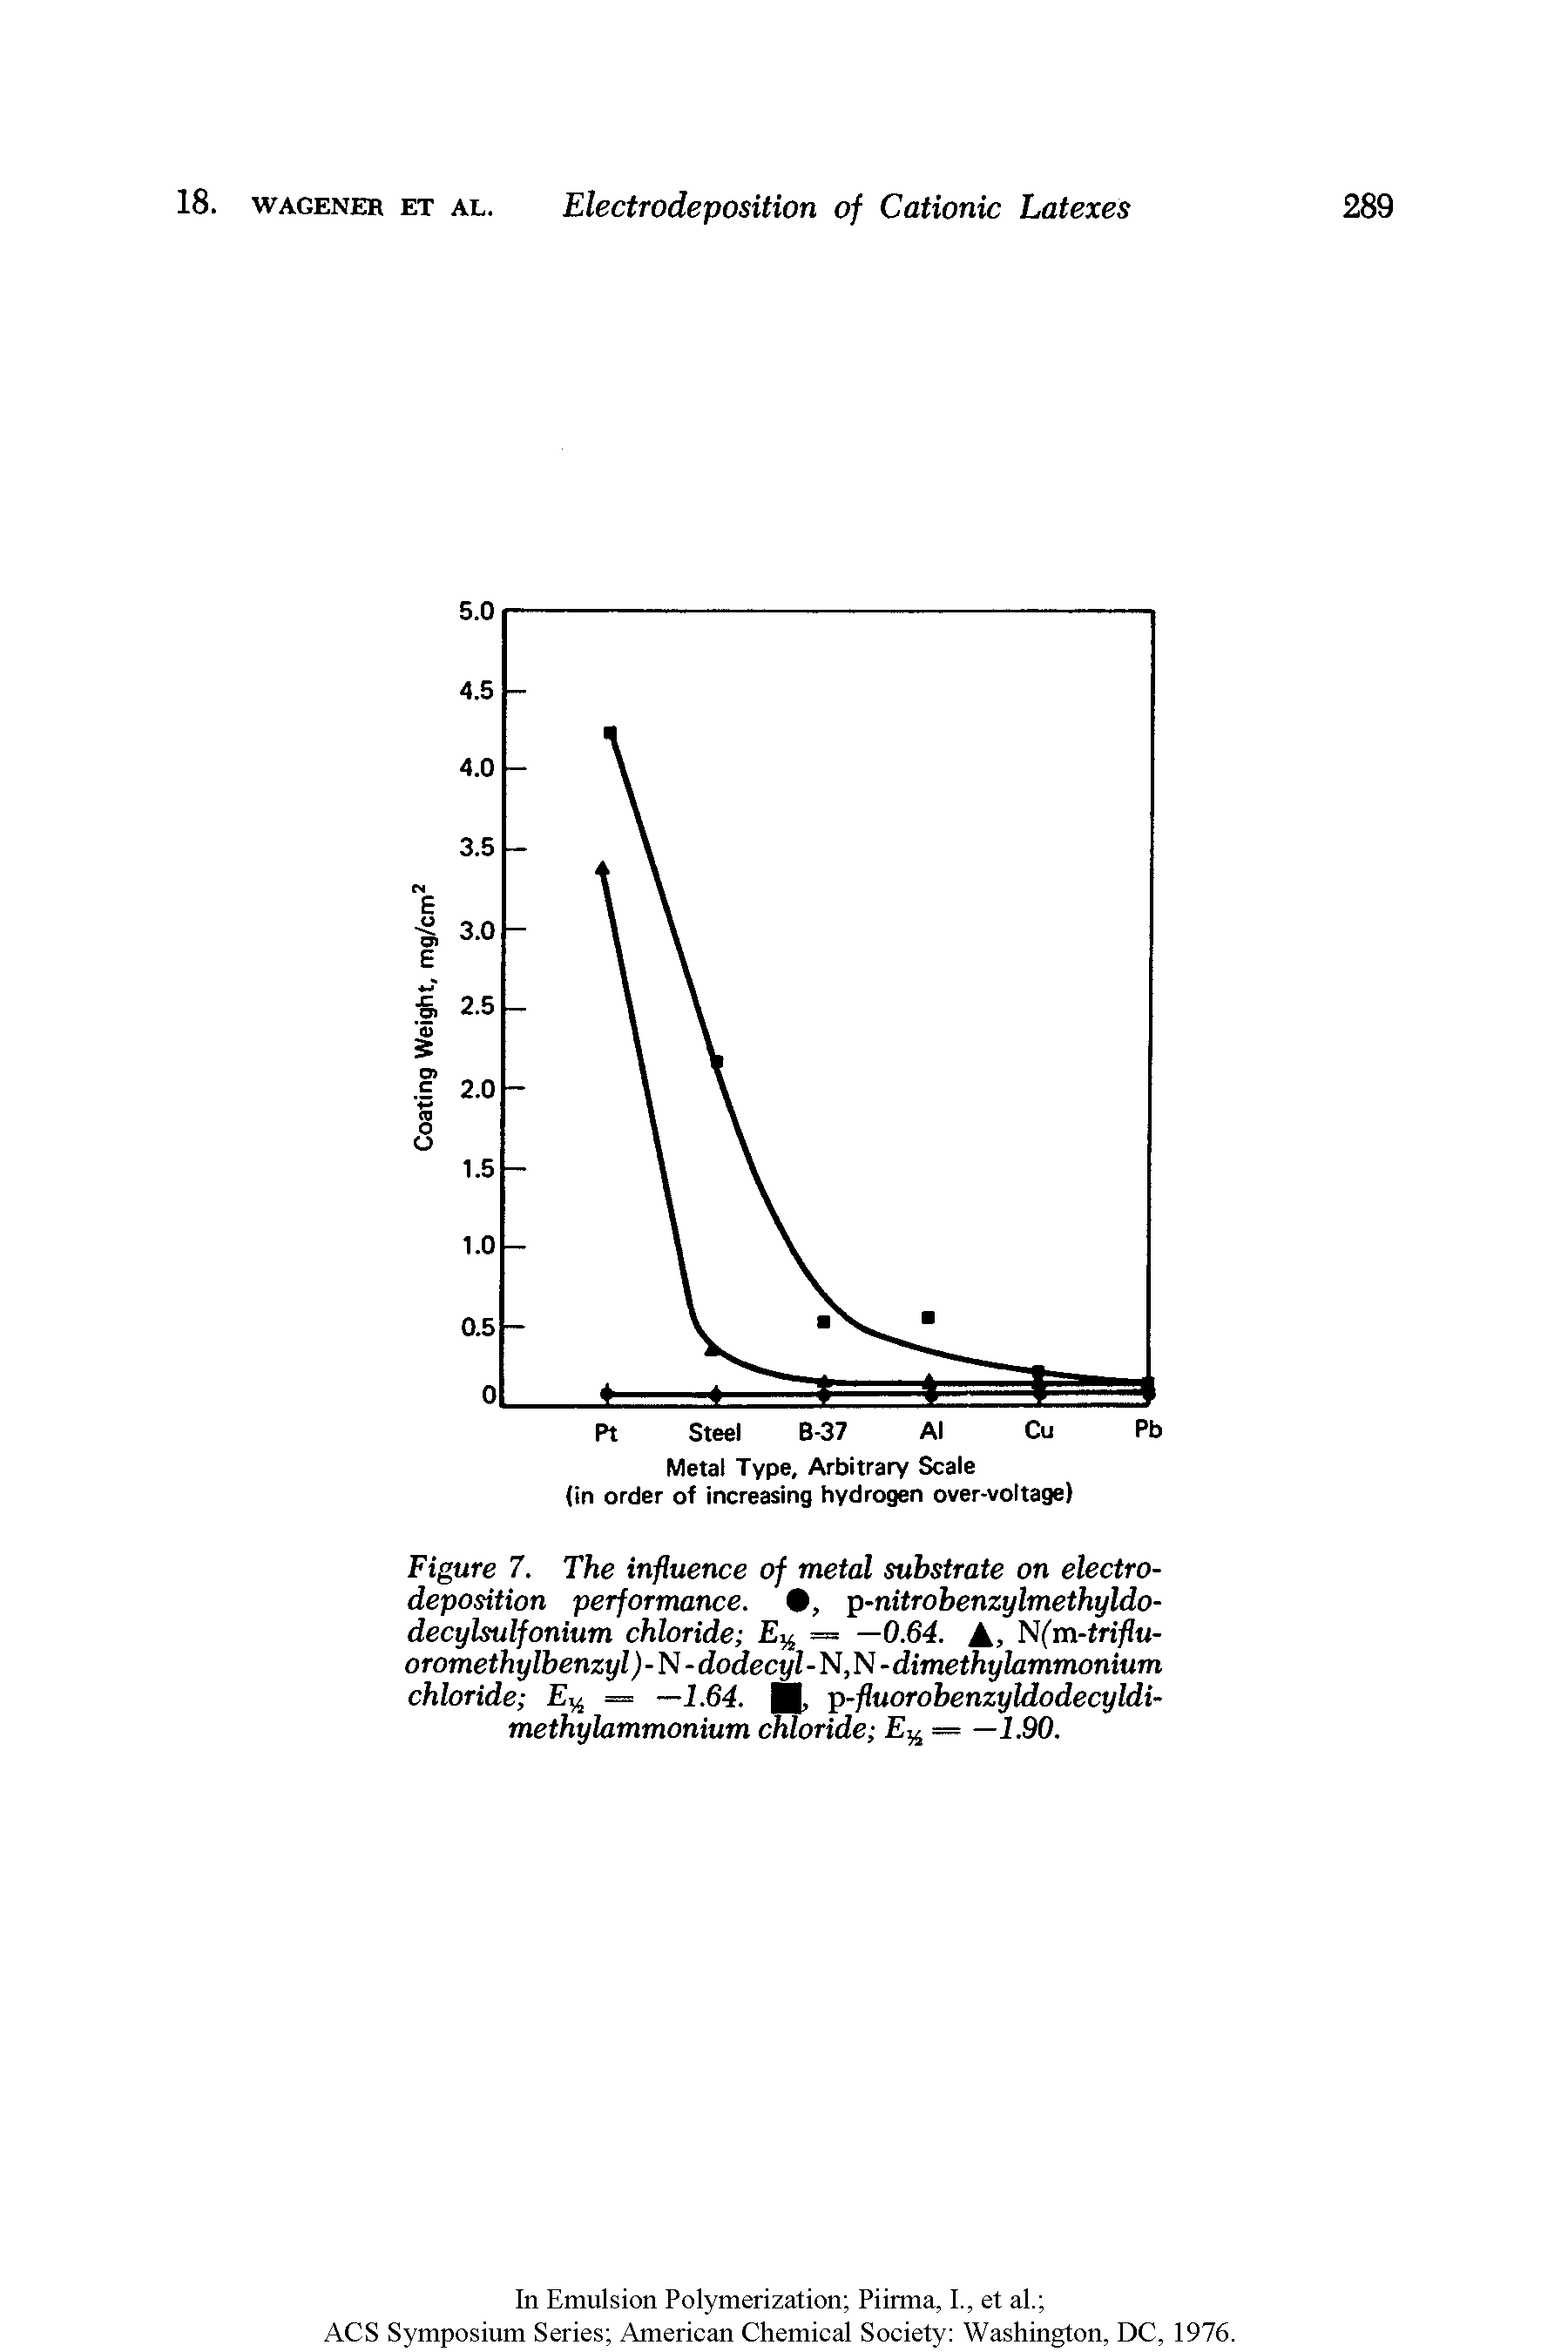 Figure 7. The influence of metal substrate on electrodeposition performance. , p-nitrobenzylmethyldo-decylsulfonium chloride = —0.64. A, Flfm-triflu-oromethylbenzyl) - N - dodecyl - N, N-dimethylammonium chloride = —1.64. p-fluorobenzyldodecyldi-methylammonium chloride = —1.90.